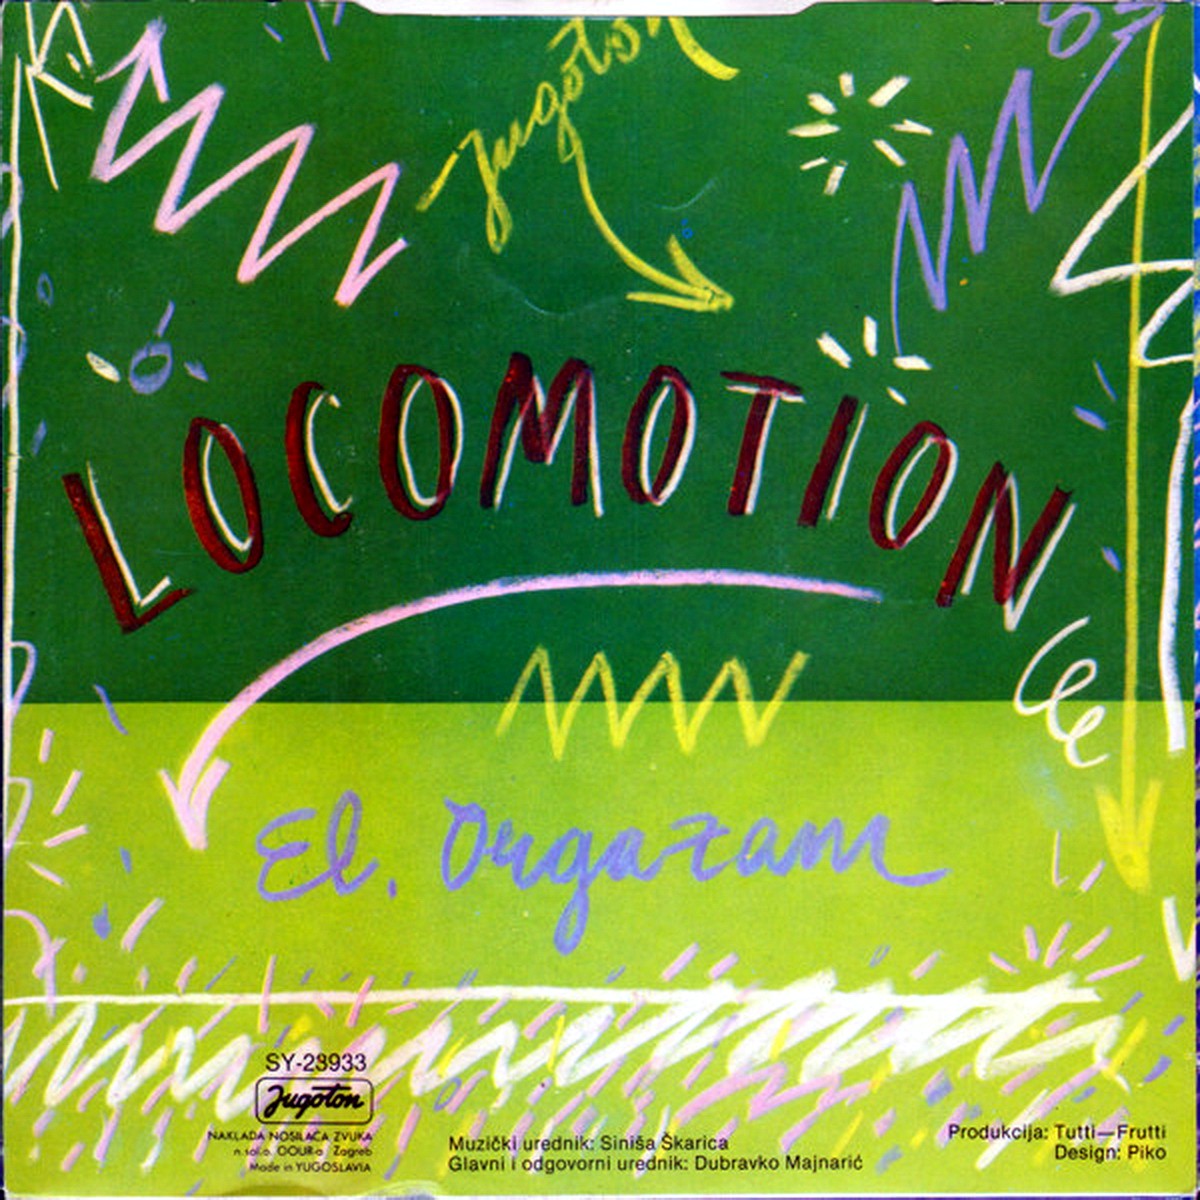 Elektricni Orgazam 1983 Locomotion b